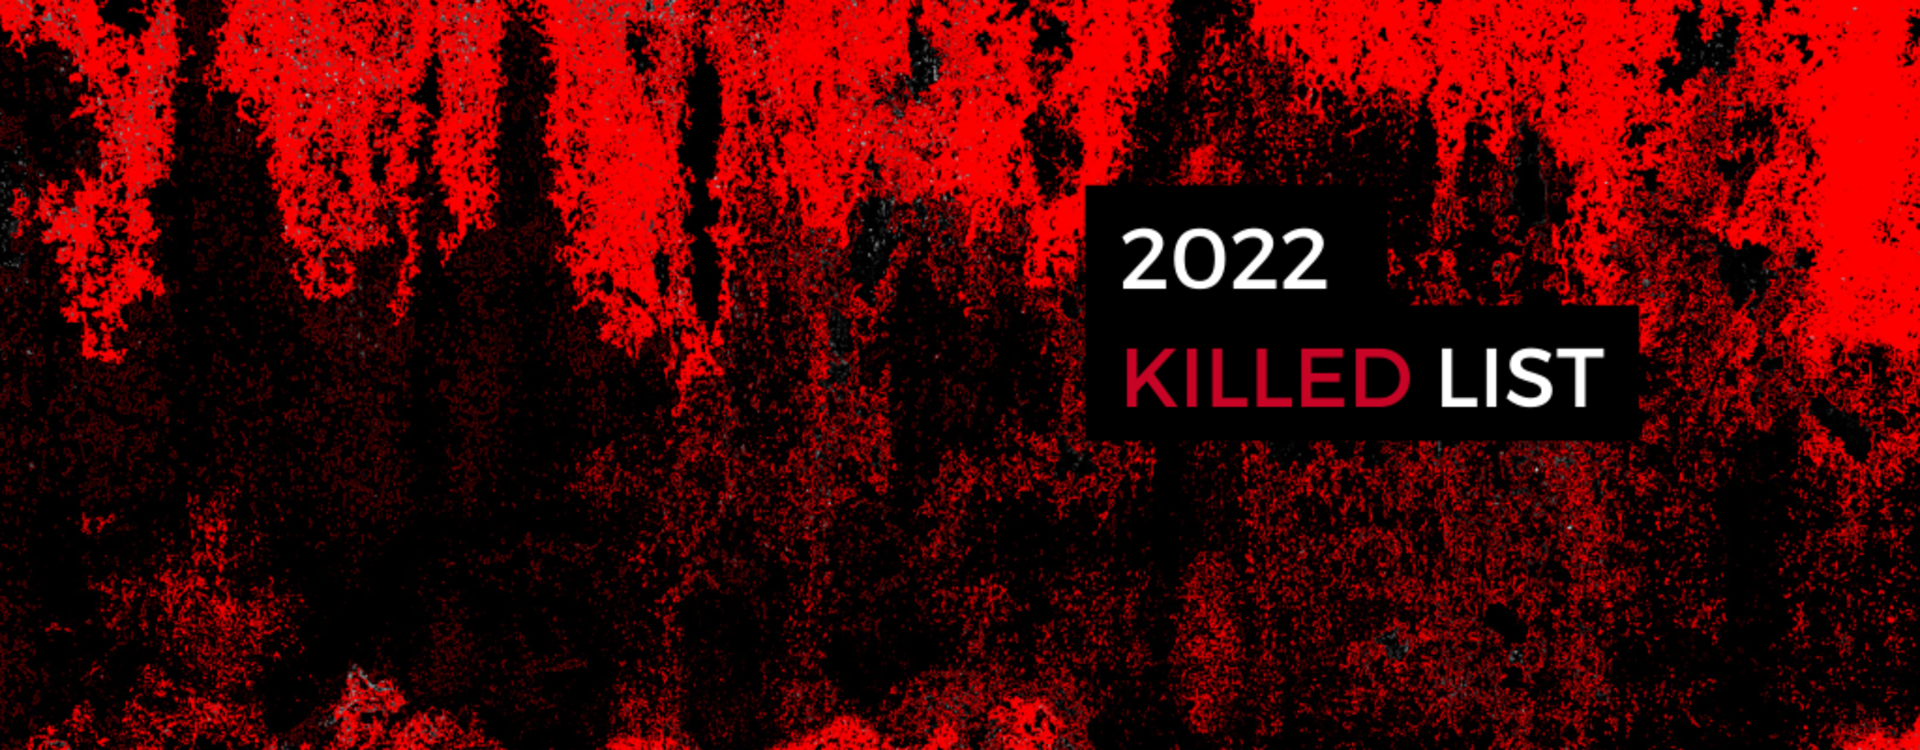 68 killings of media professionals in 2022